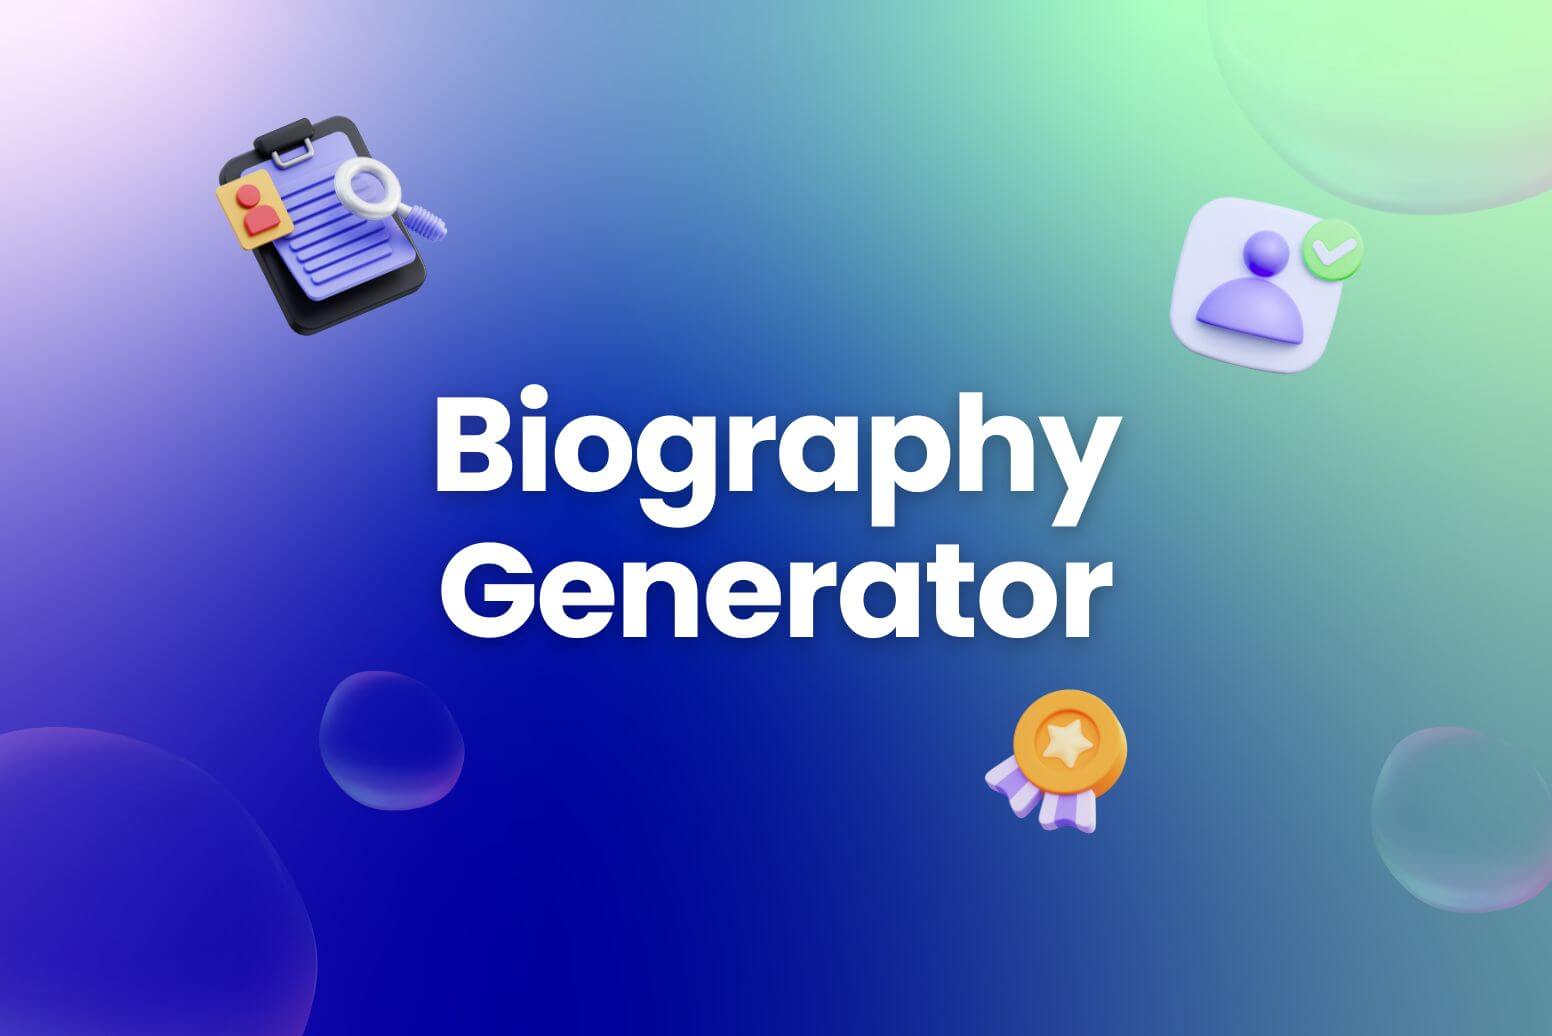 Biography Generator